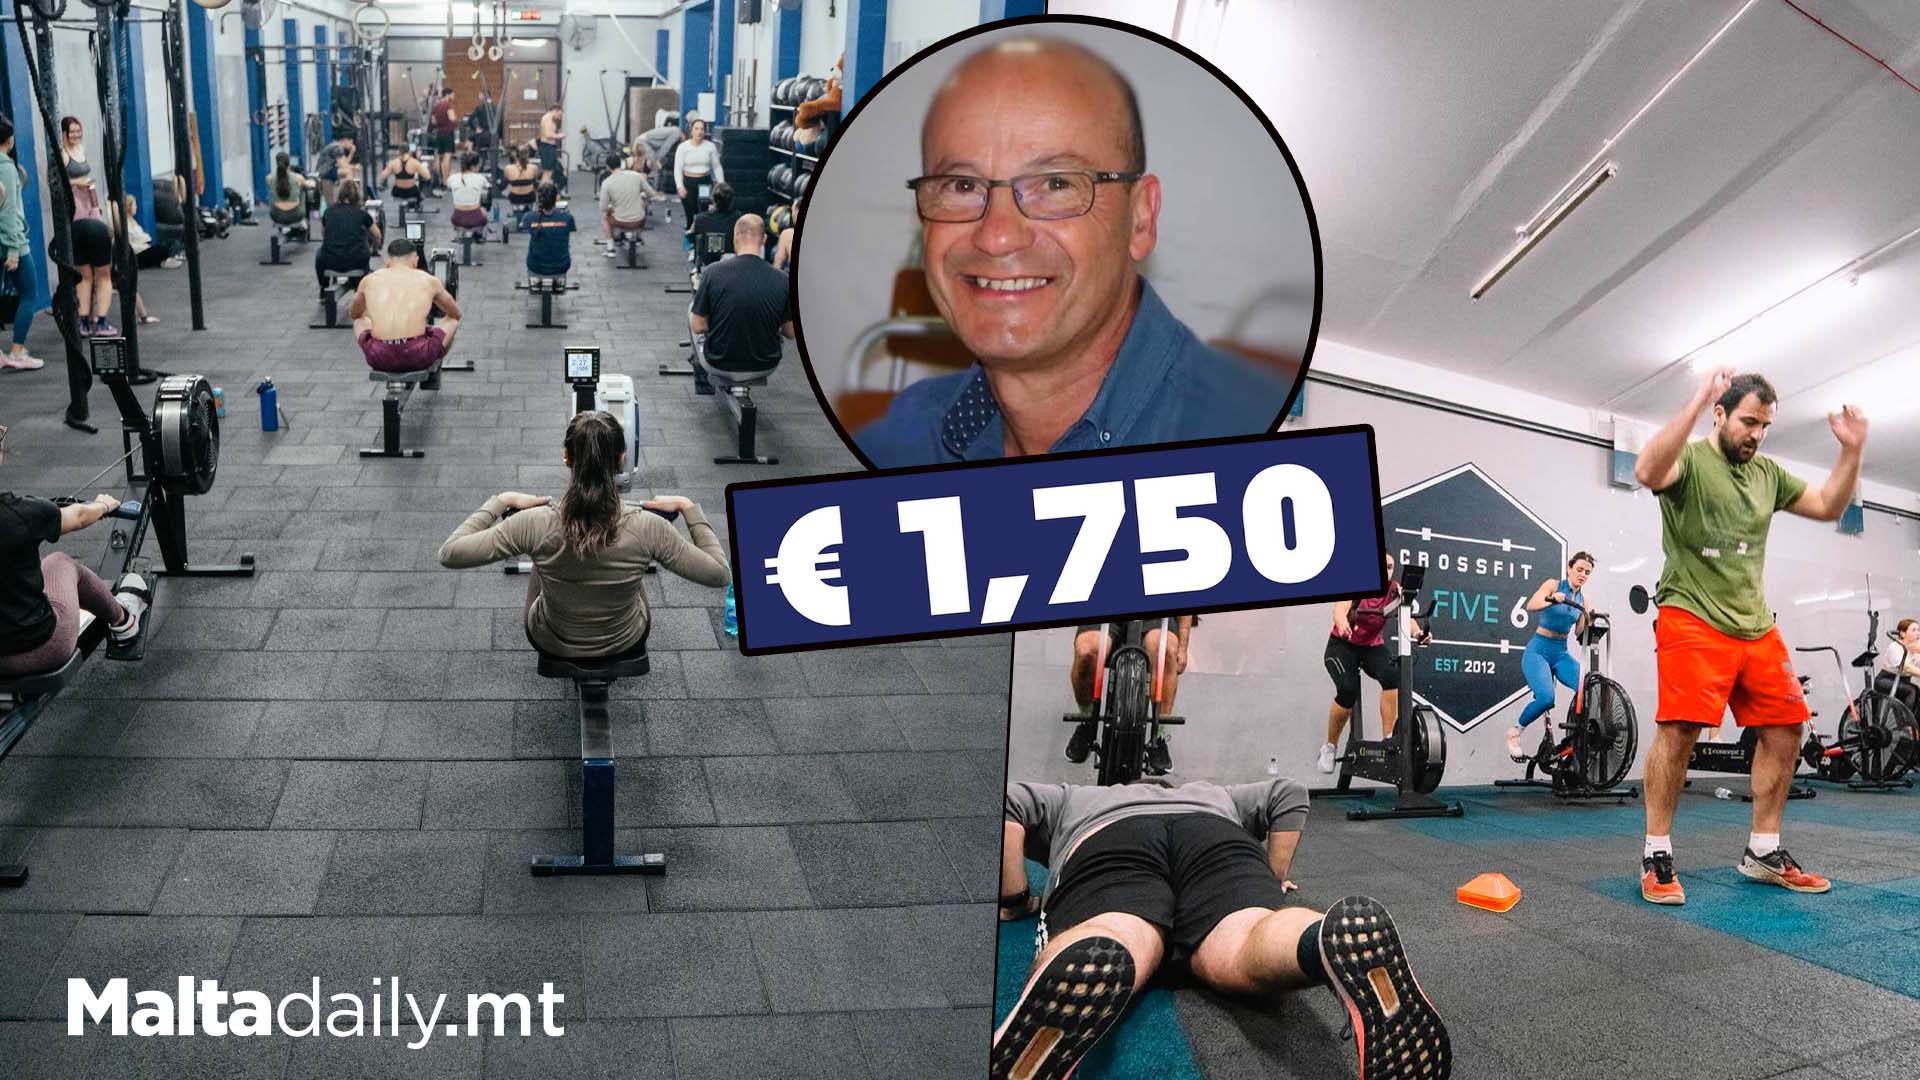 CrossFit356 Raises €1,750 In Memory Of Dr Calvagna